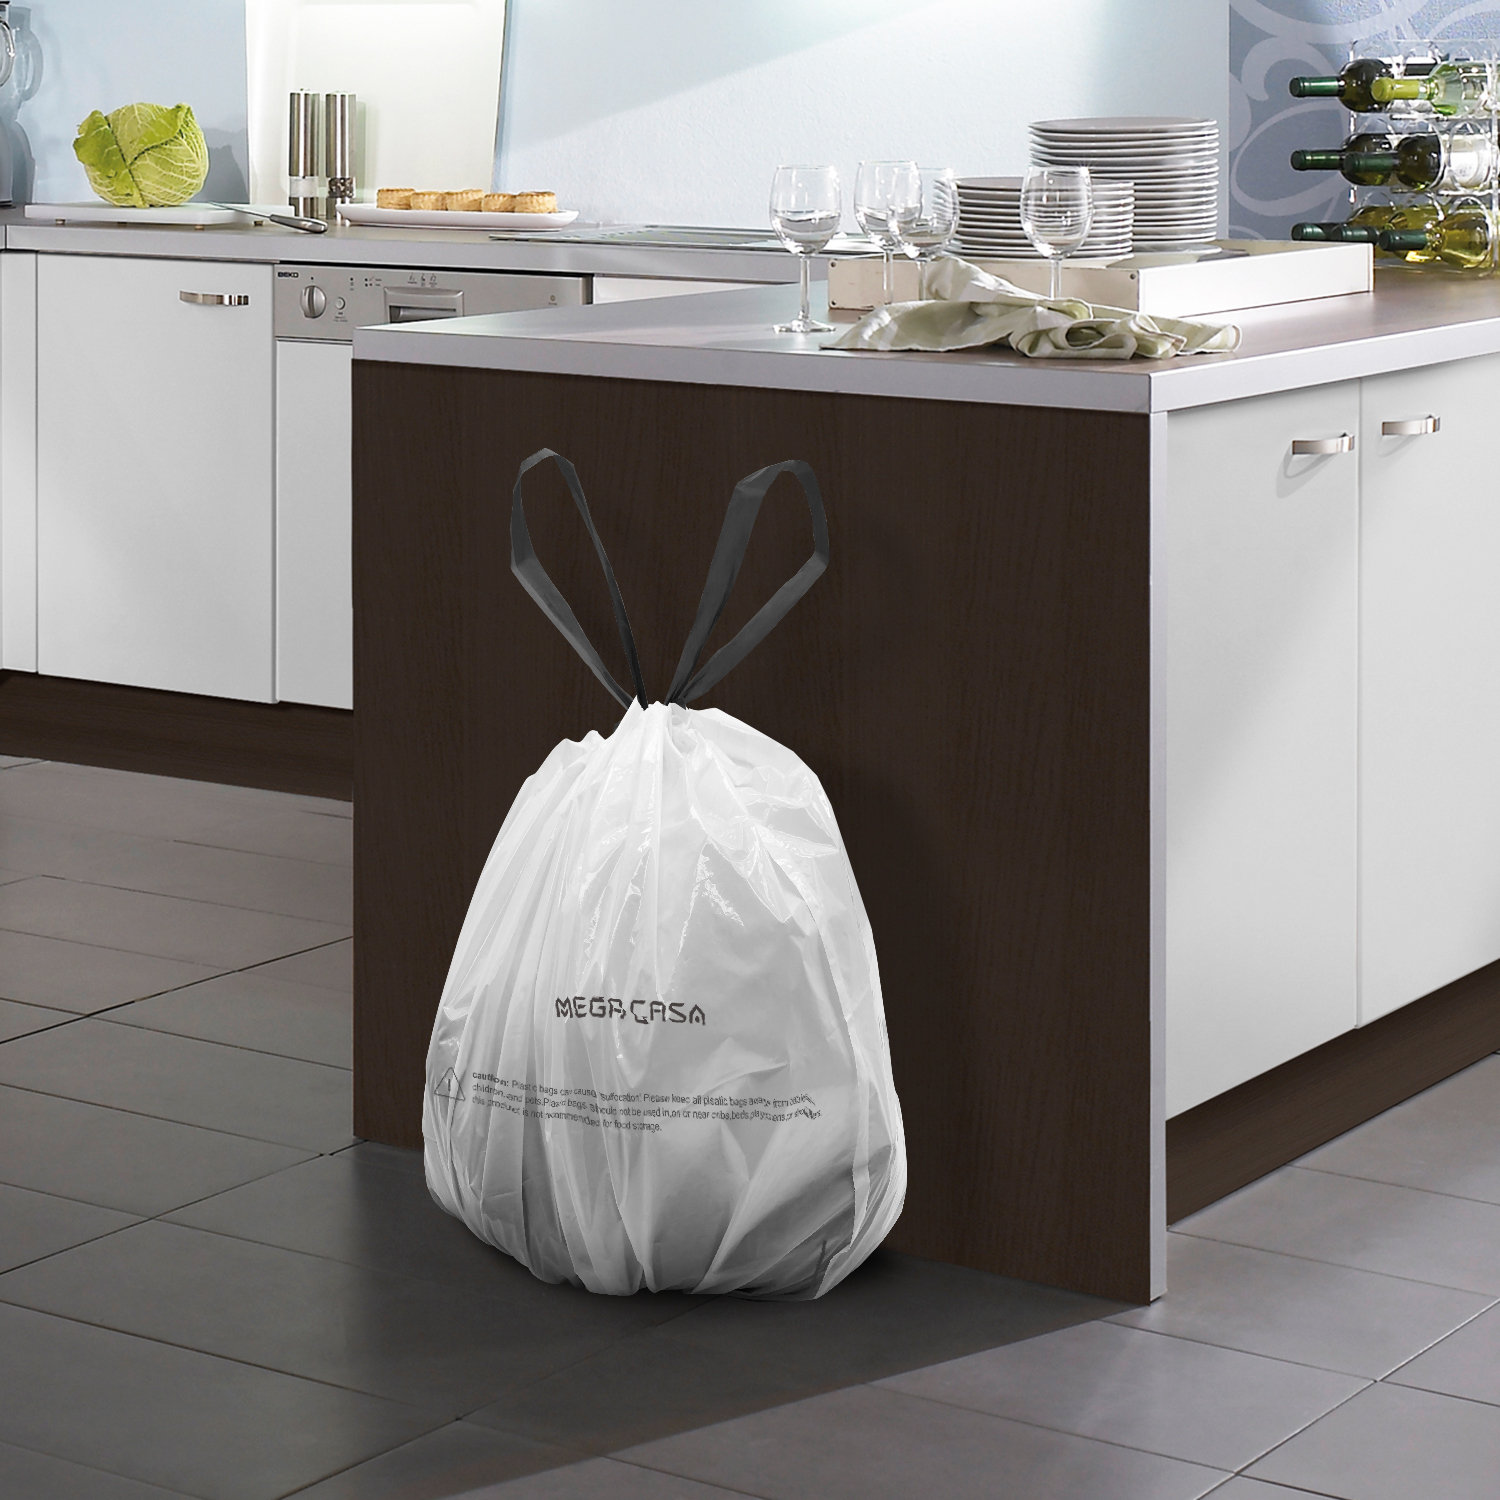 simplehuman Code H Custom Fit Drawstring Trash Bags, 8 Gallon - 60 count